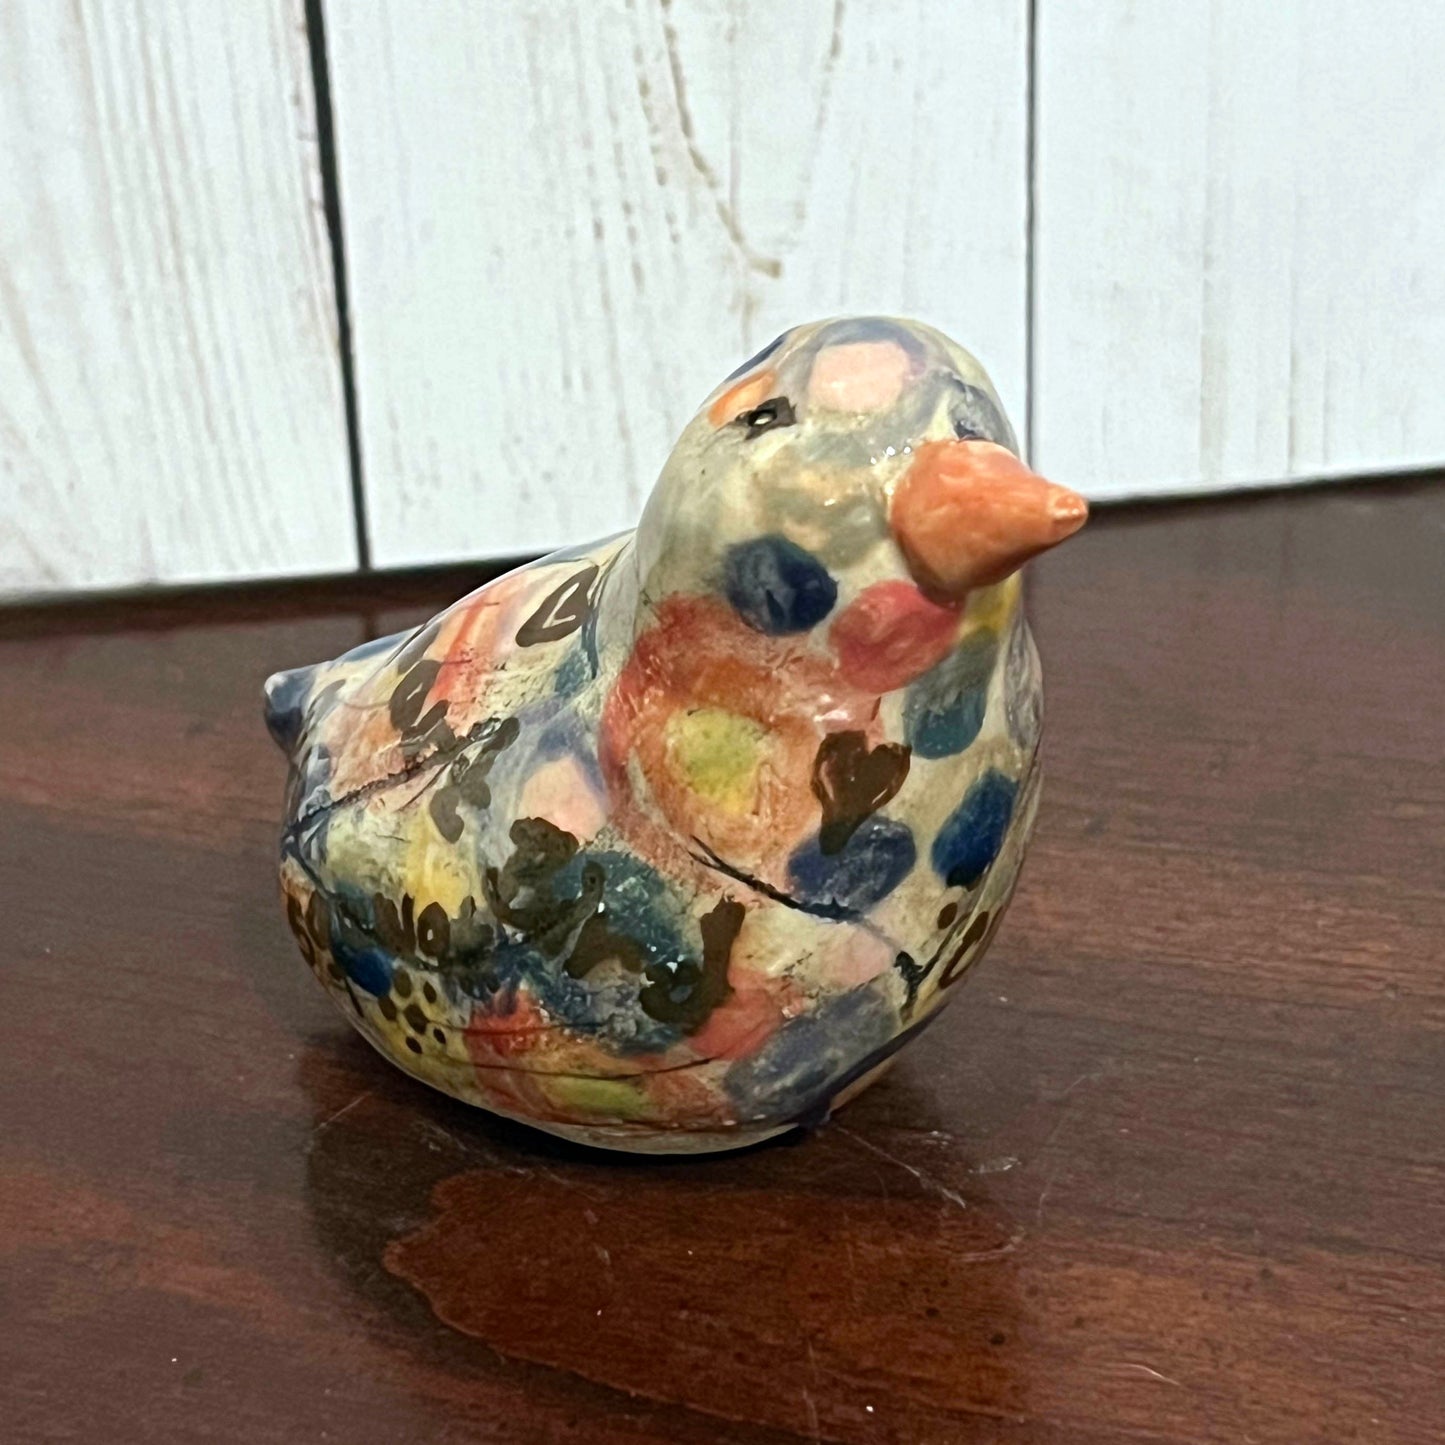 Ernie the Emotional Support Bird Ceramic Plant Friend